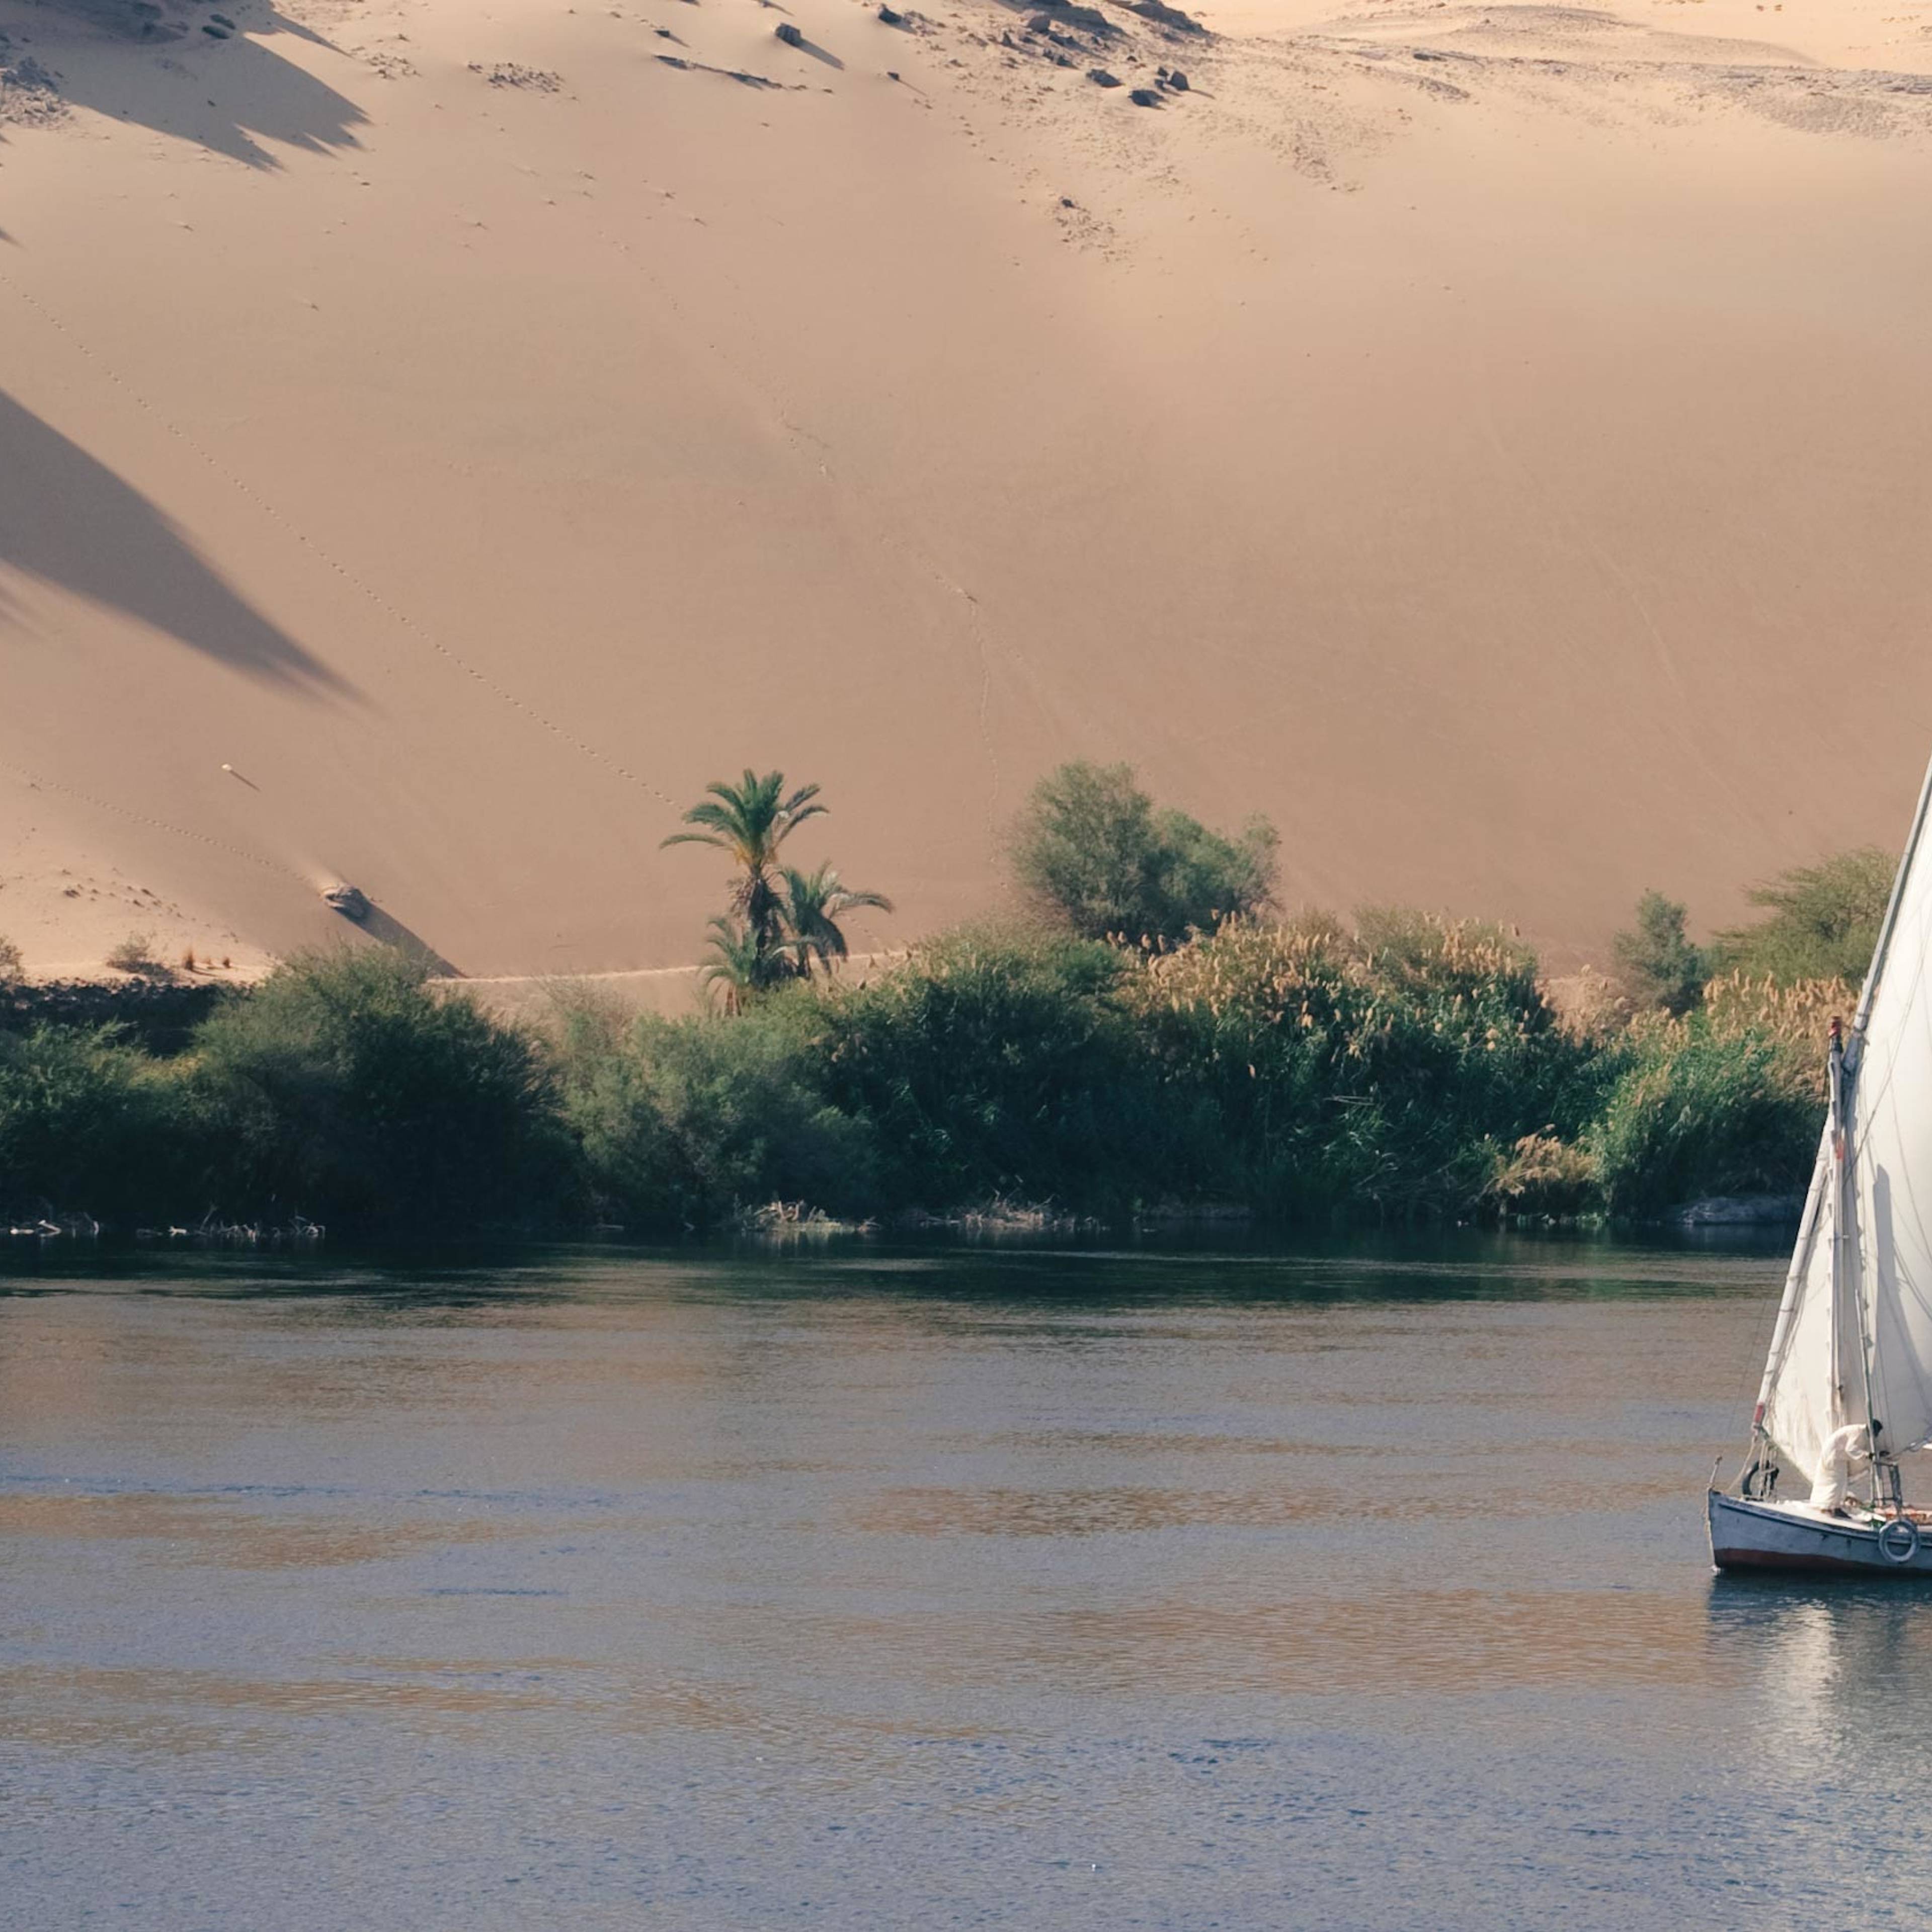 Felucca on the Nil, Egypt.